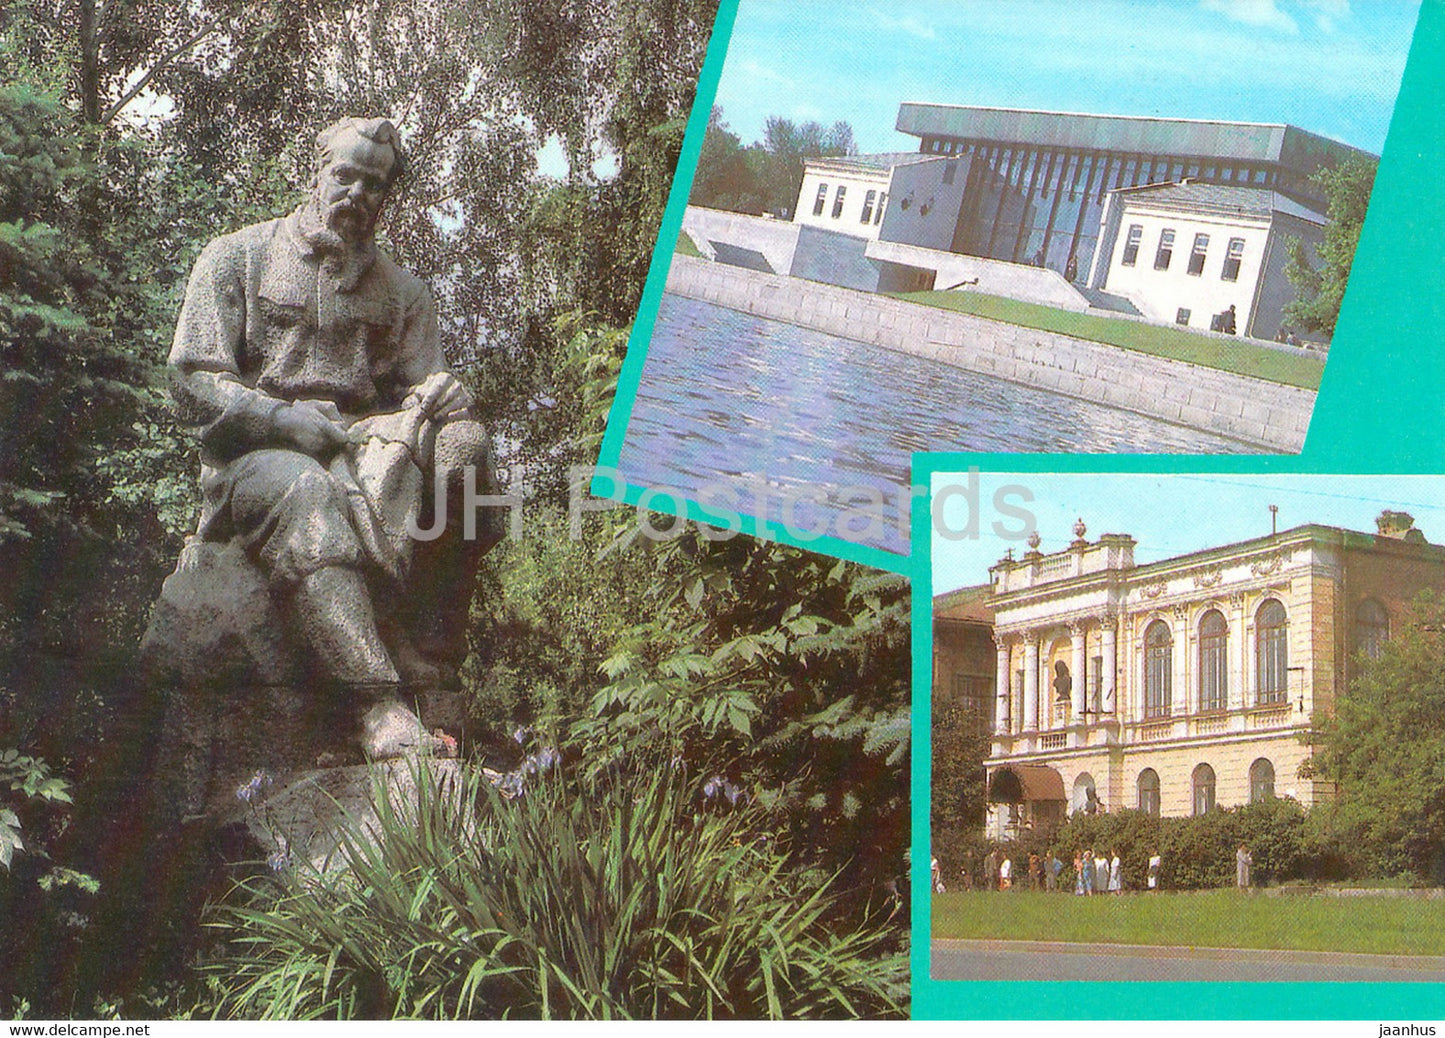 Sverdlovsk - Yekaterinburg - monument to Bazhov - Museum of Fine Art - Children Library - 1987 Russia USSR - unused - JH Postcards